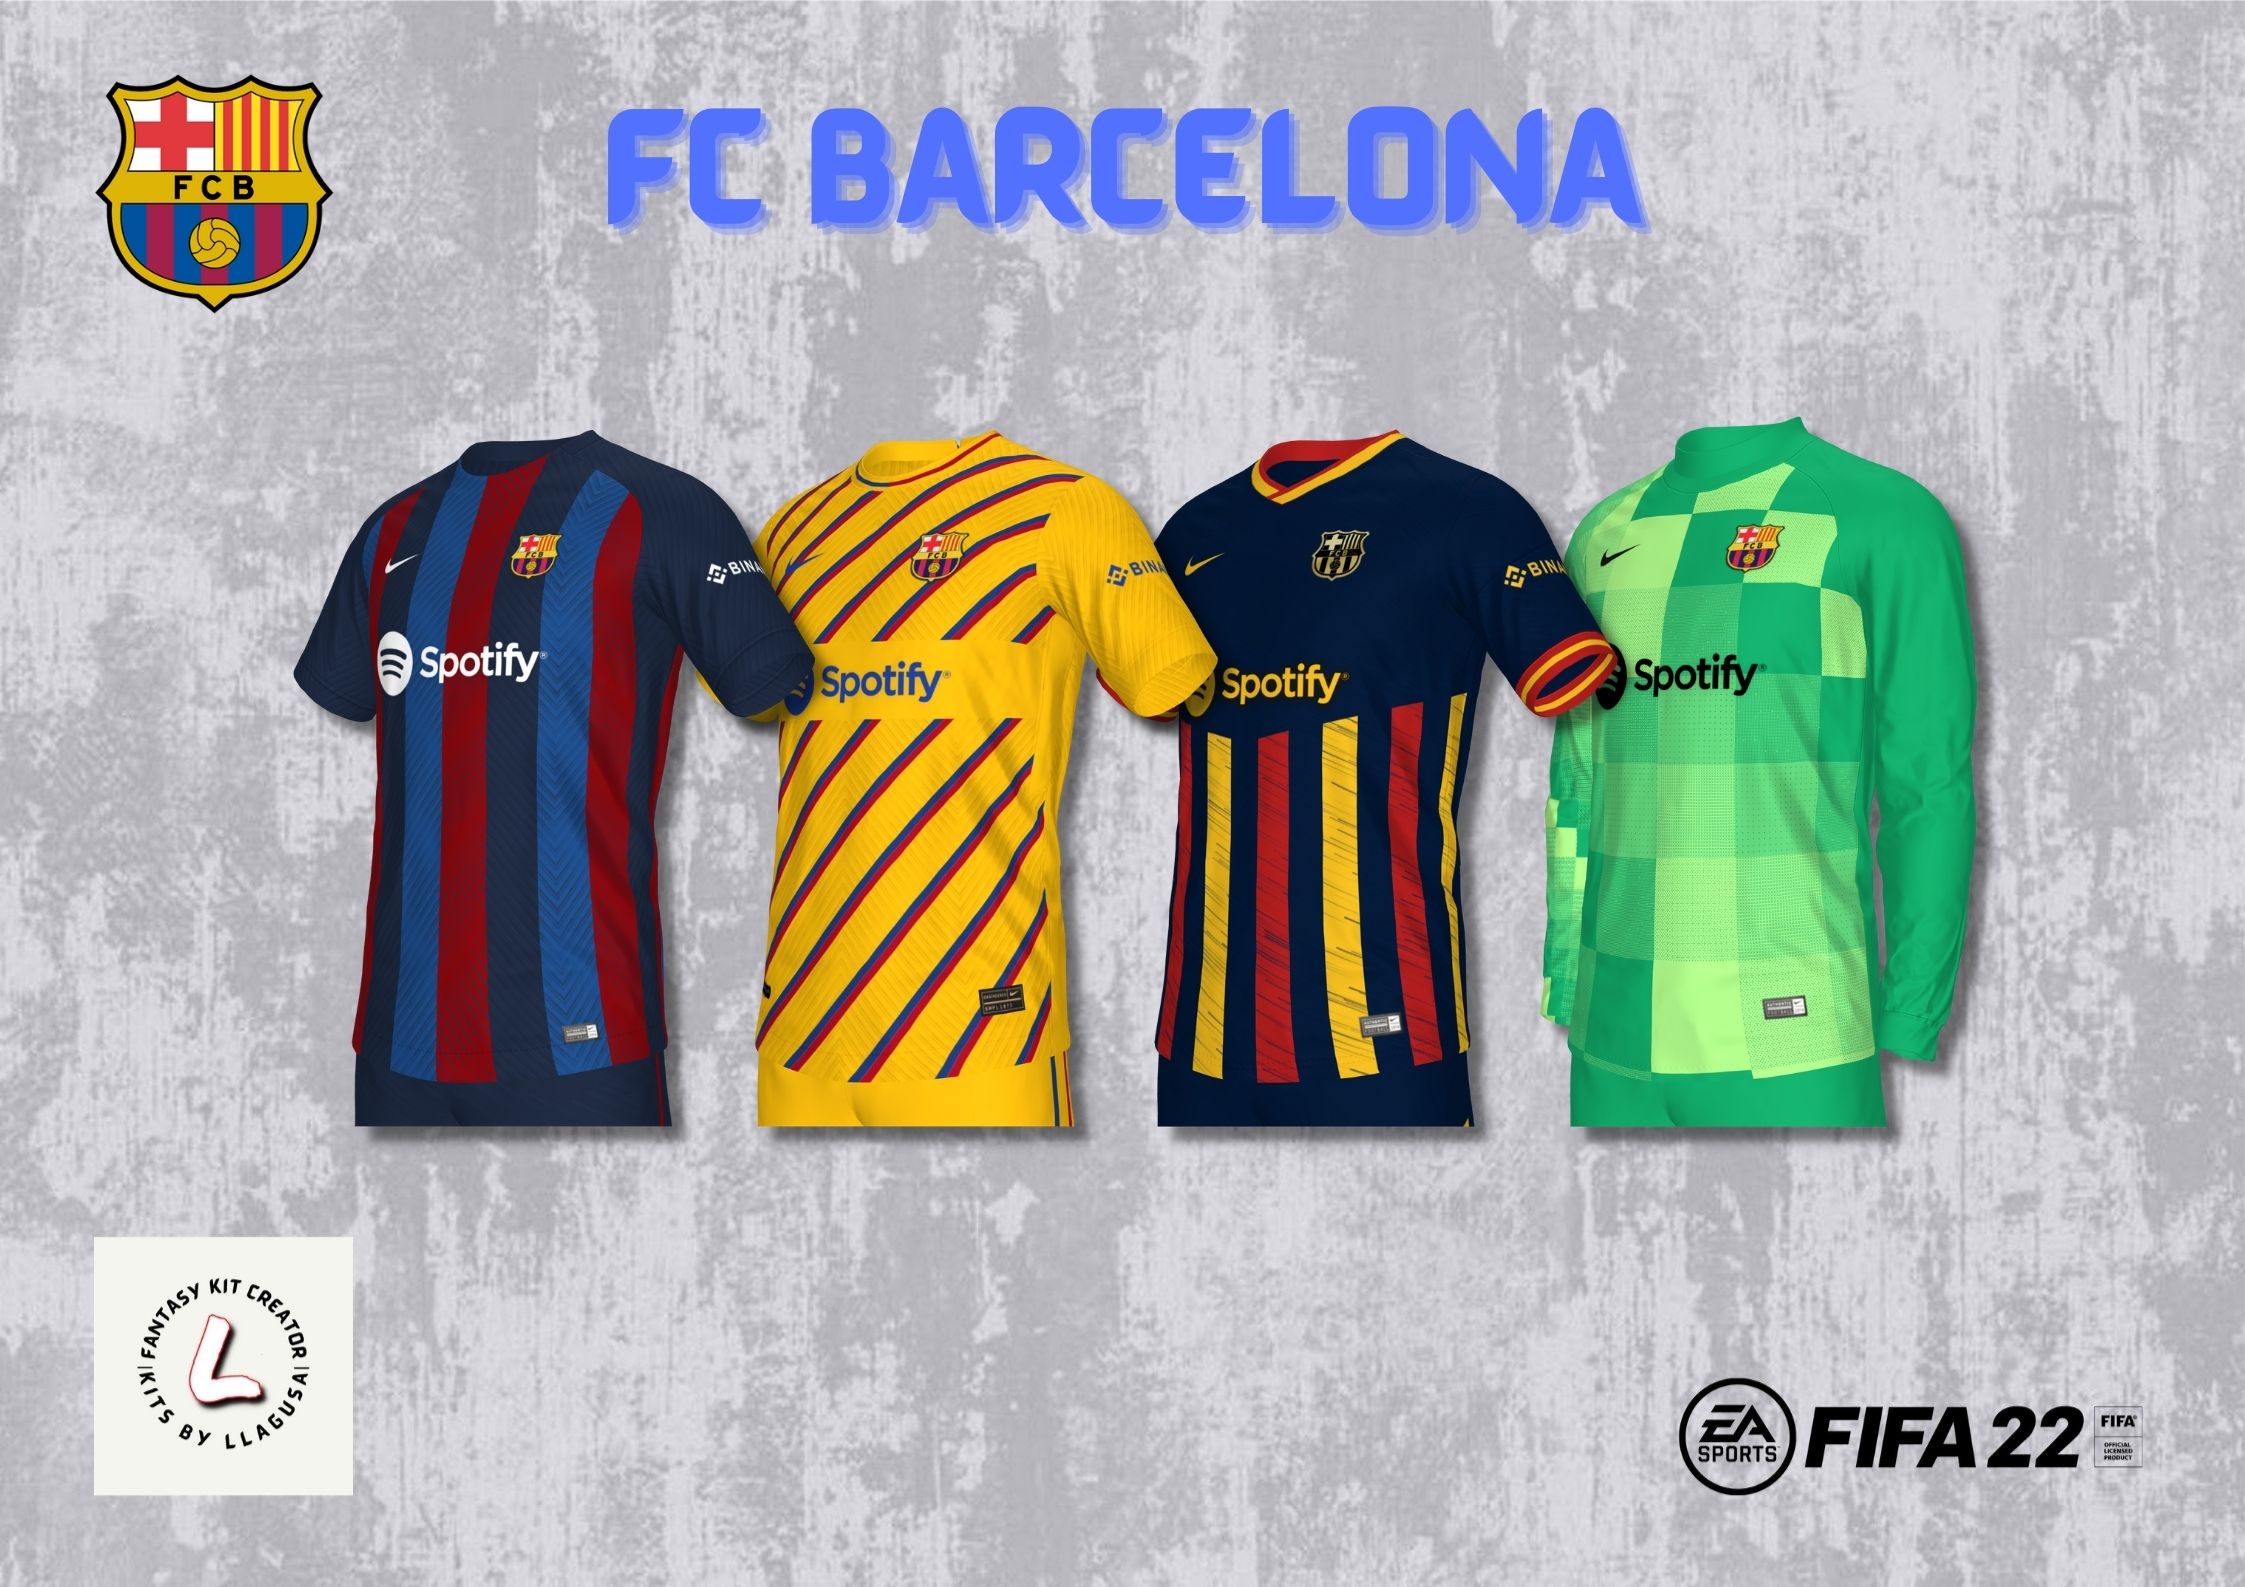 Ari Barcelona Leaked Kit 2022 2023 With Spotify As A Sponsor FREE Download, #FIFA22 #FCBarcelona #FCB #LaLiga